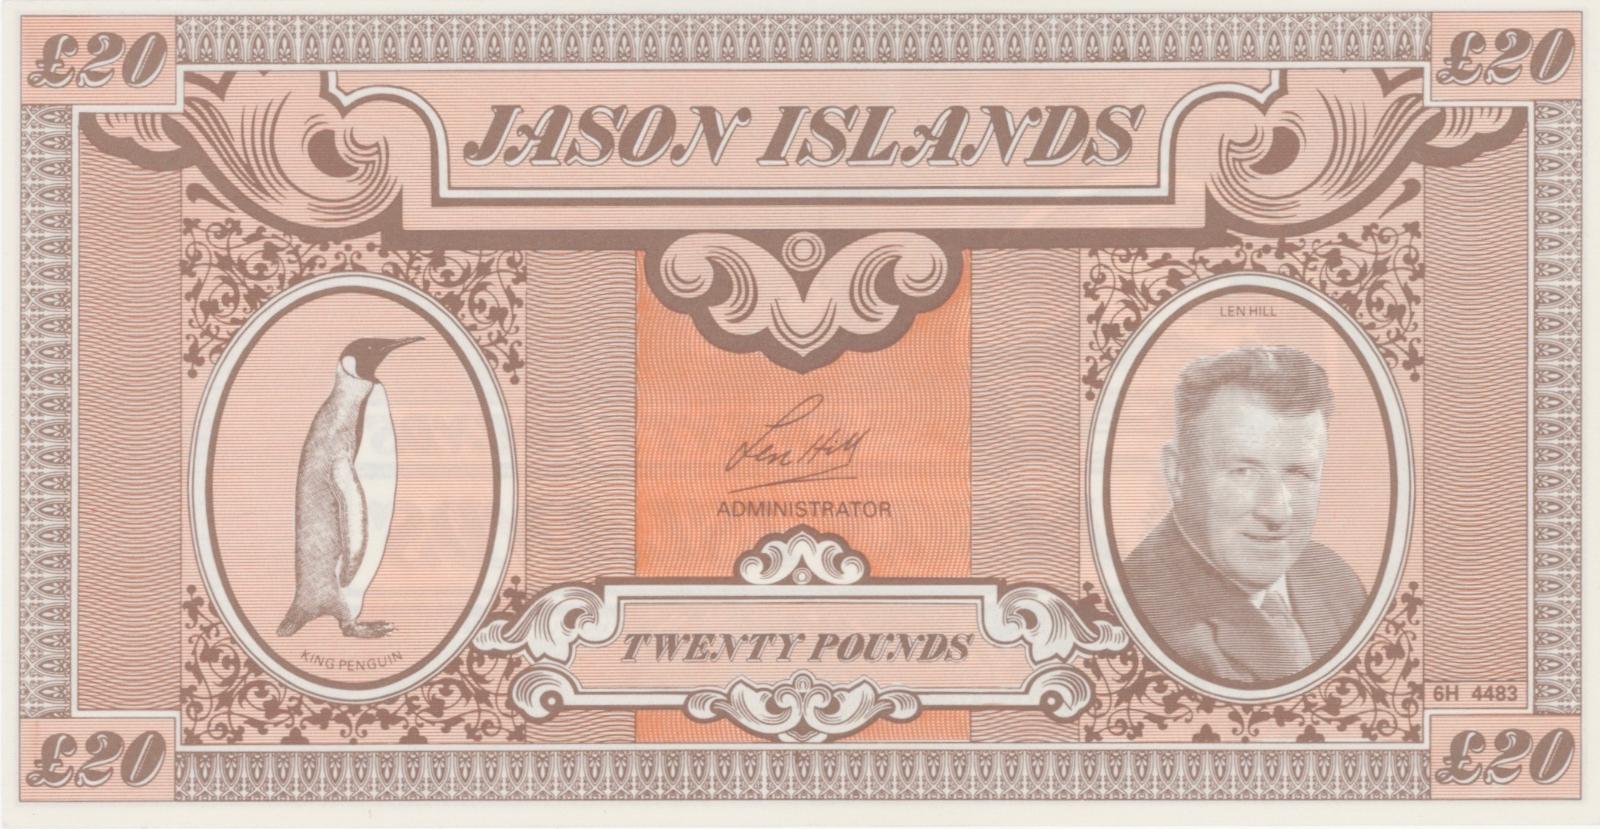 Jason Islands, 20 libier, bez dátumu, UNC - Zberateľstvo